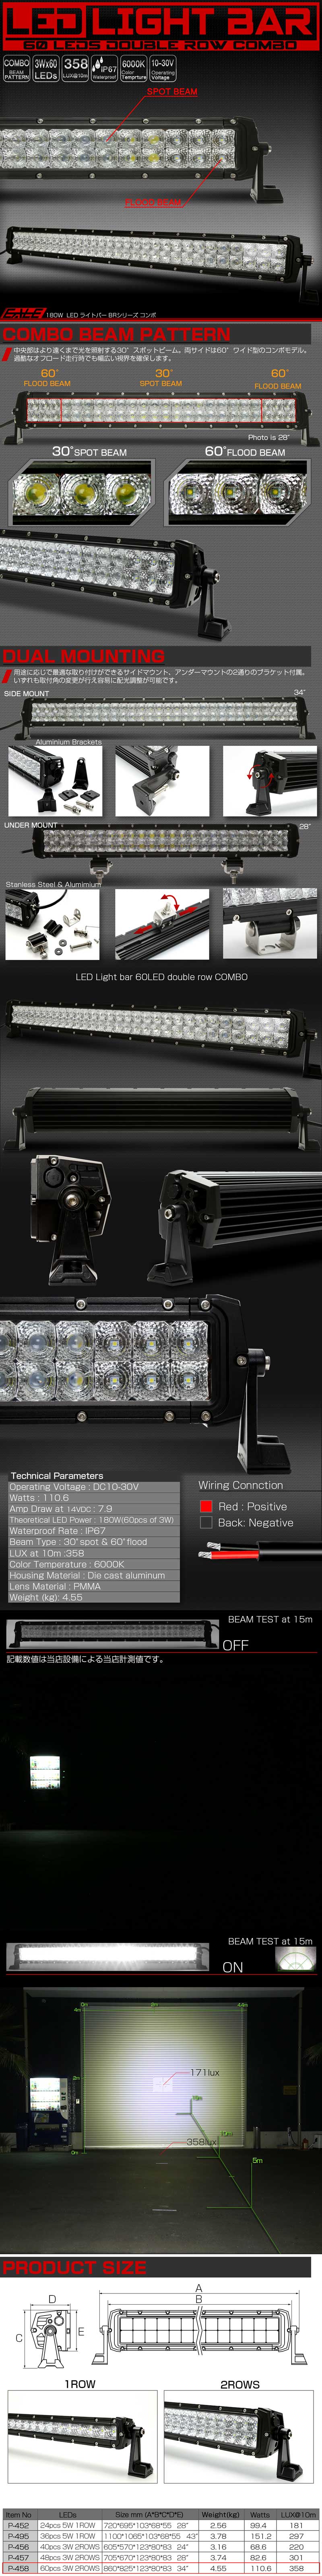 LED ライトバー ワークライト 作業灯 180W 12V 24V 防水 IP67 P-465 - 3